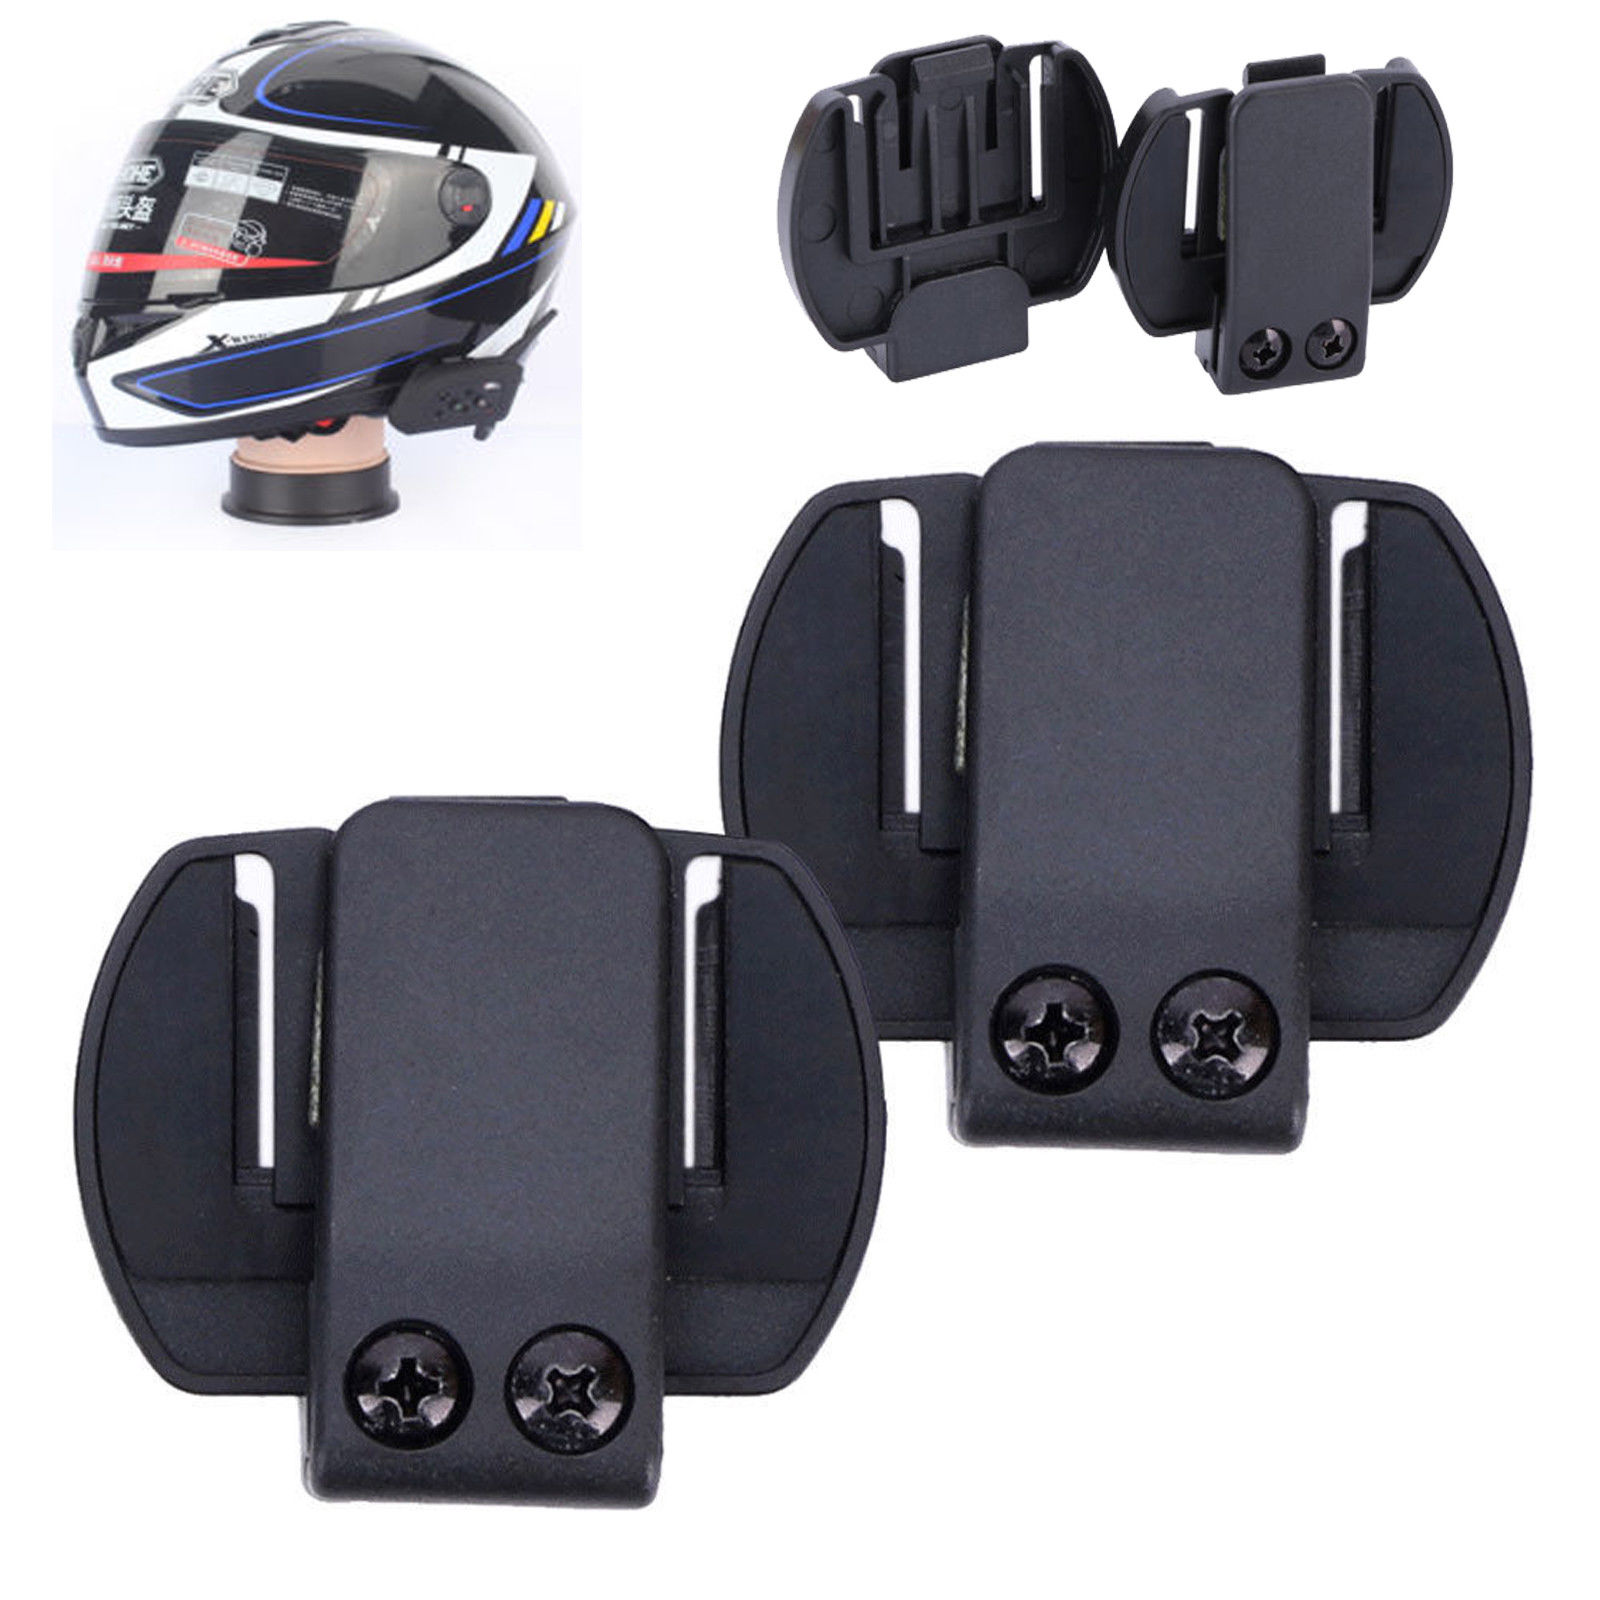 2x Intercom Holder Clip For V6 V4 Motorcycle Bluetooth Helmet Interphone Headset Ebay